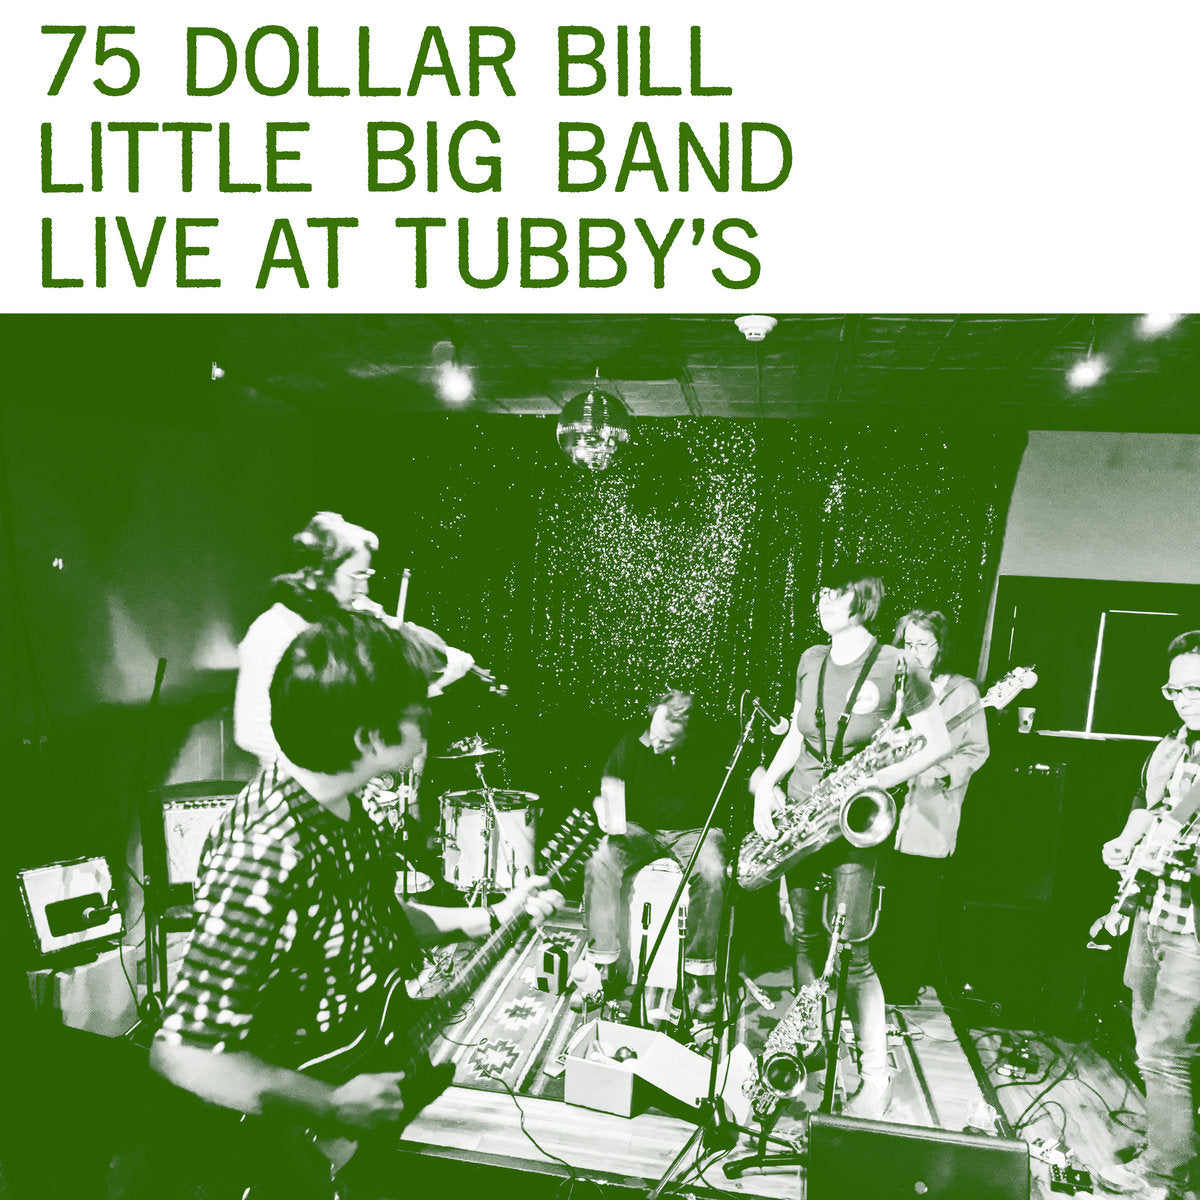 75 DOLLAR BILL LITTLE BIG BAND - Live at Tubby's - 2LP - Vinyl